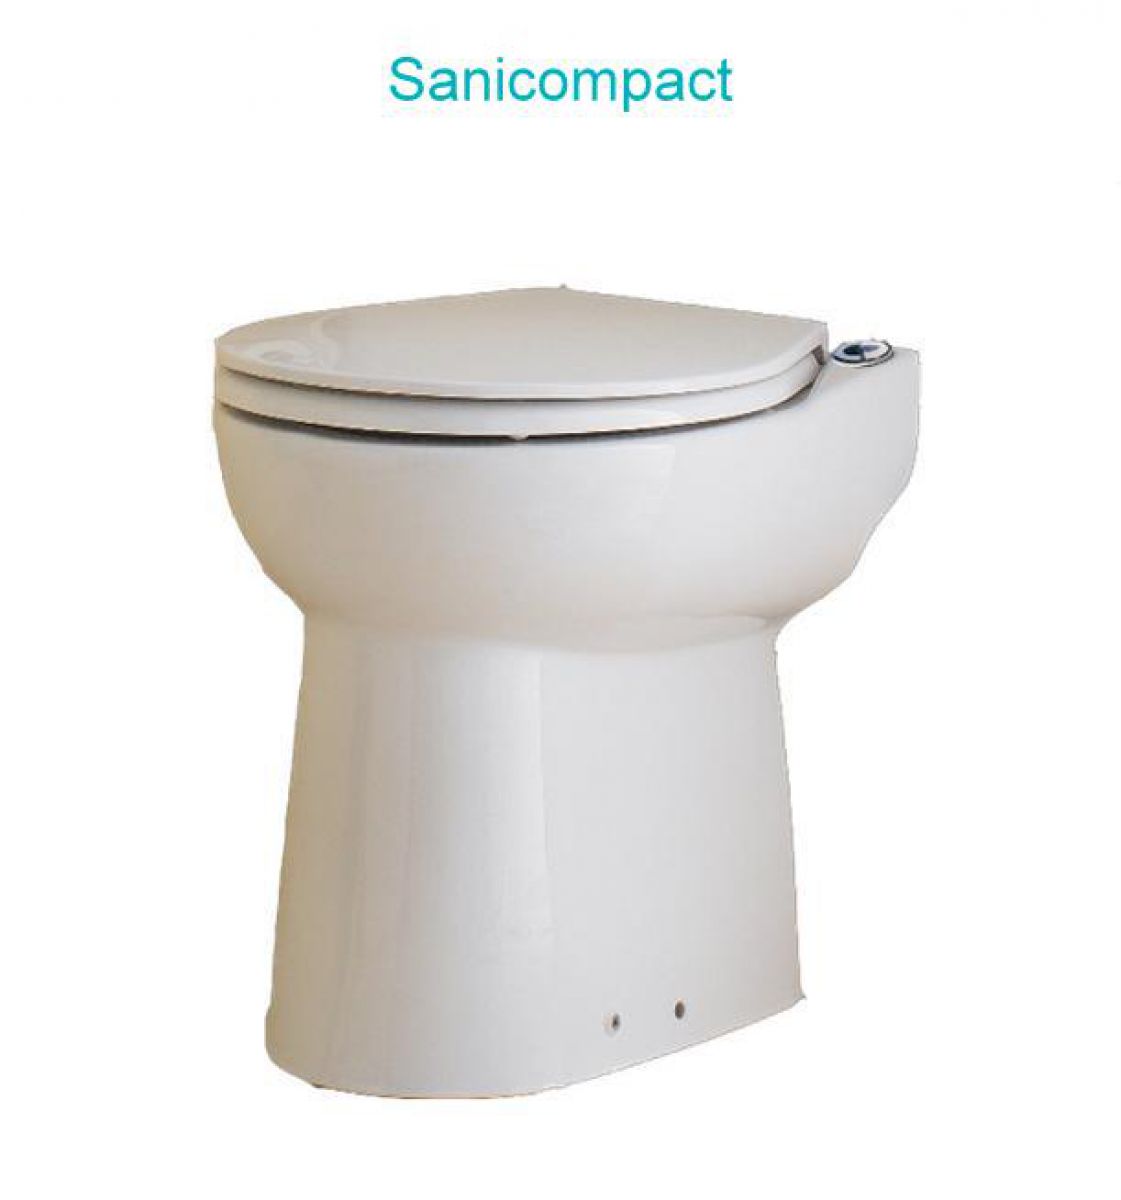 Saniflo Sanicompact Toilet and Macerator Package - 1081